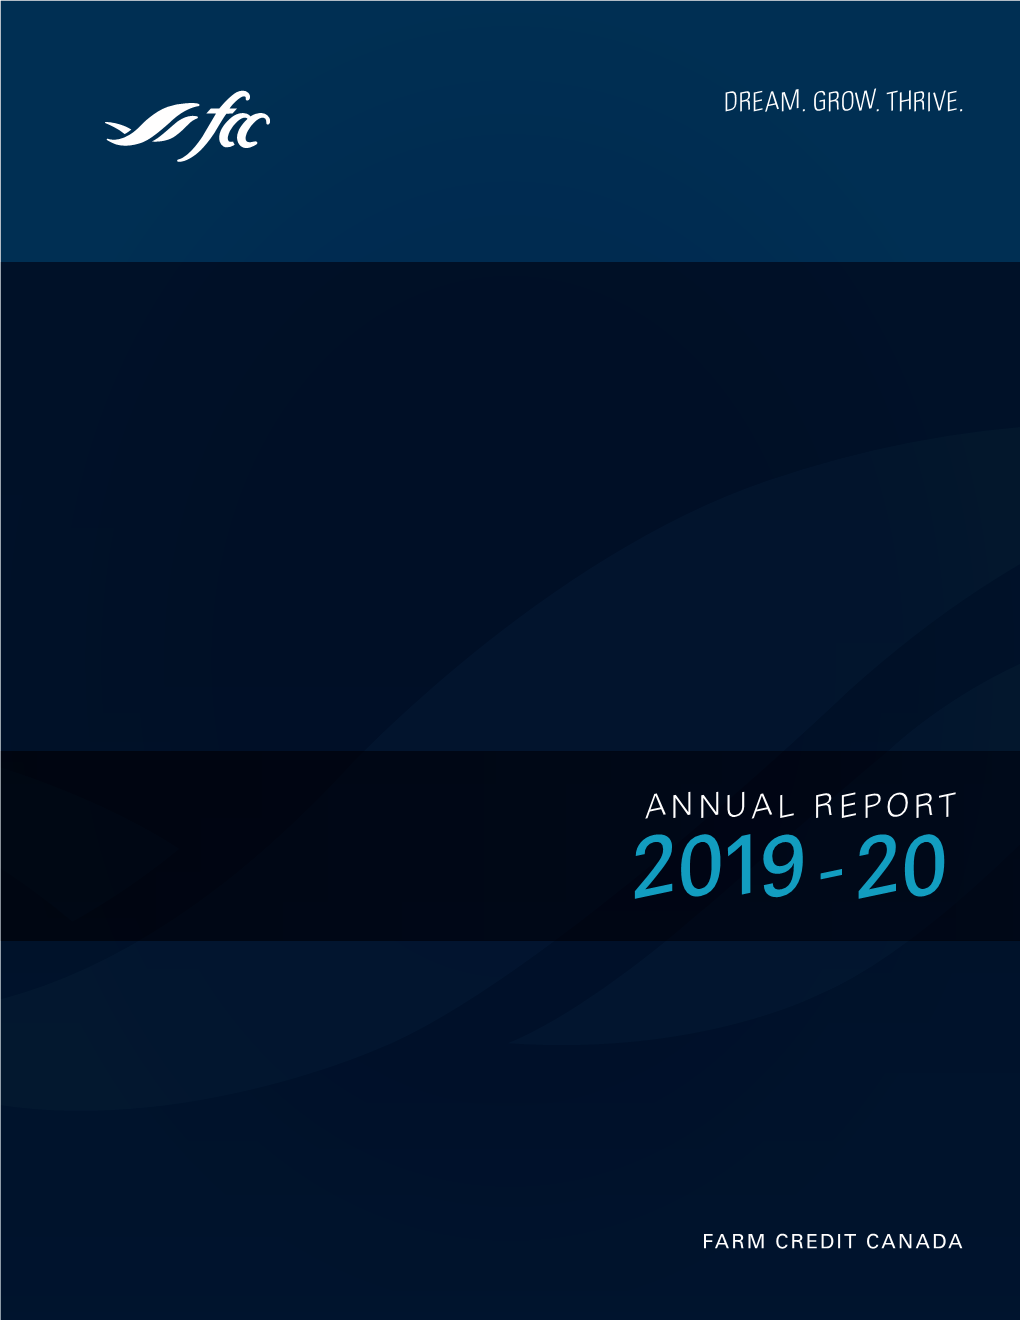 Annual Report 2019- 20